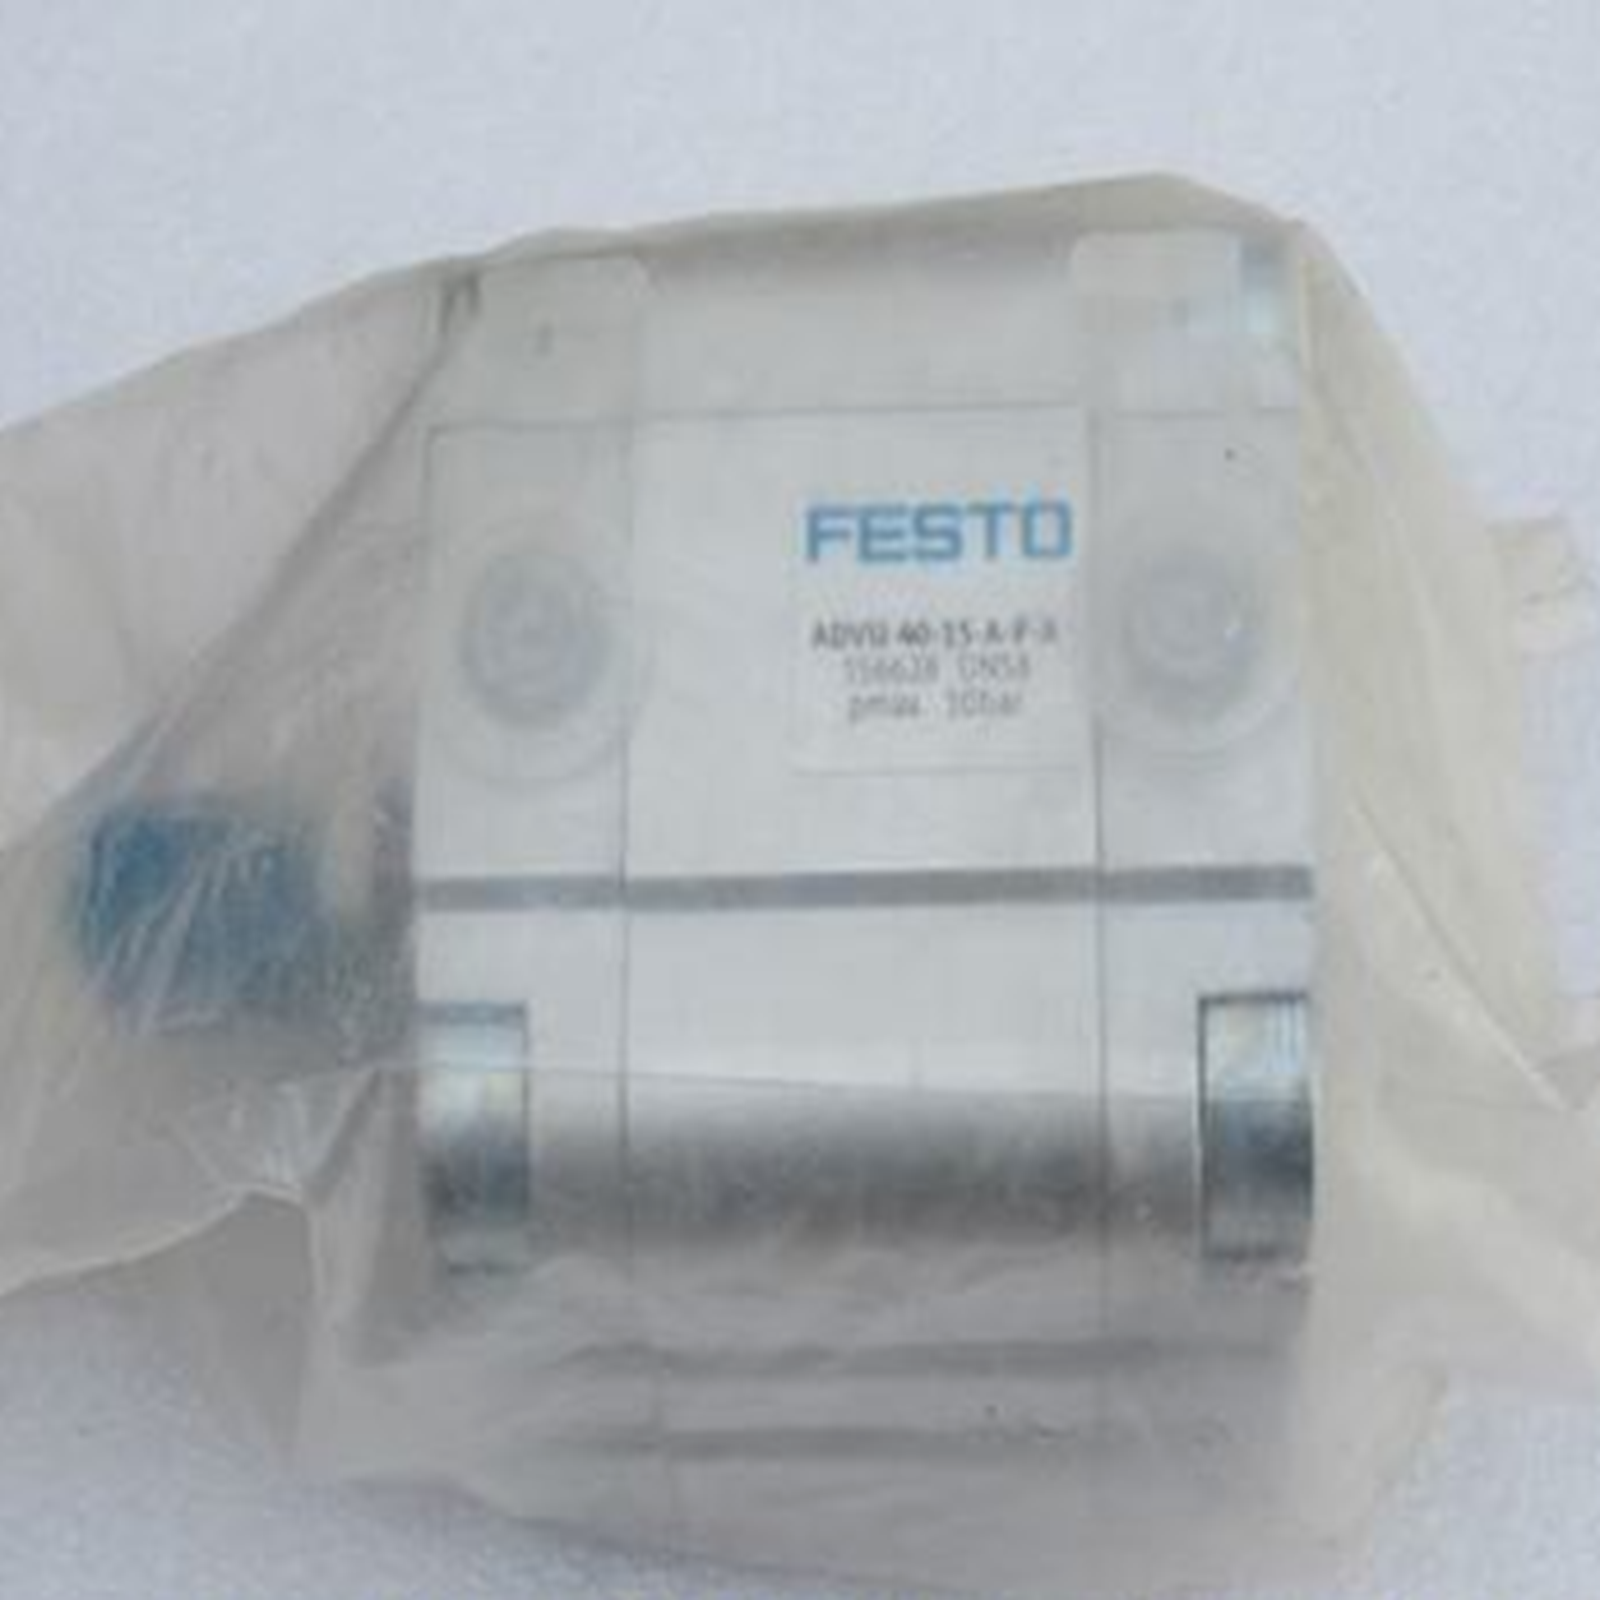 FESTO ADVU-40-15-P-A 156542 Compact Air Cylinder